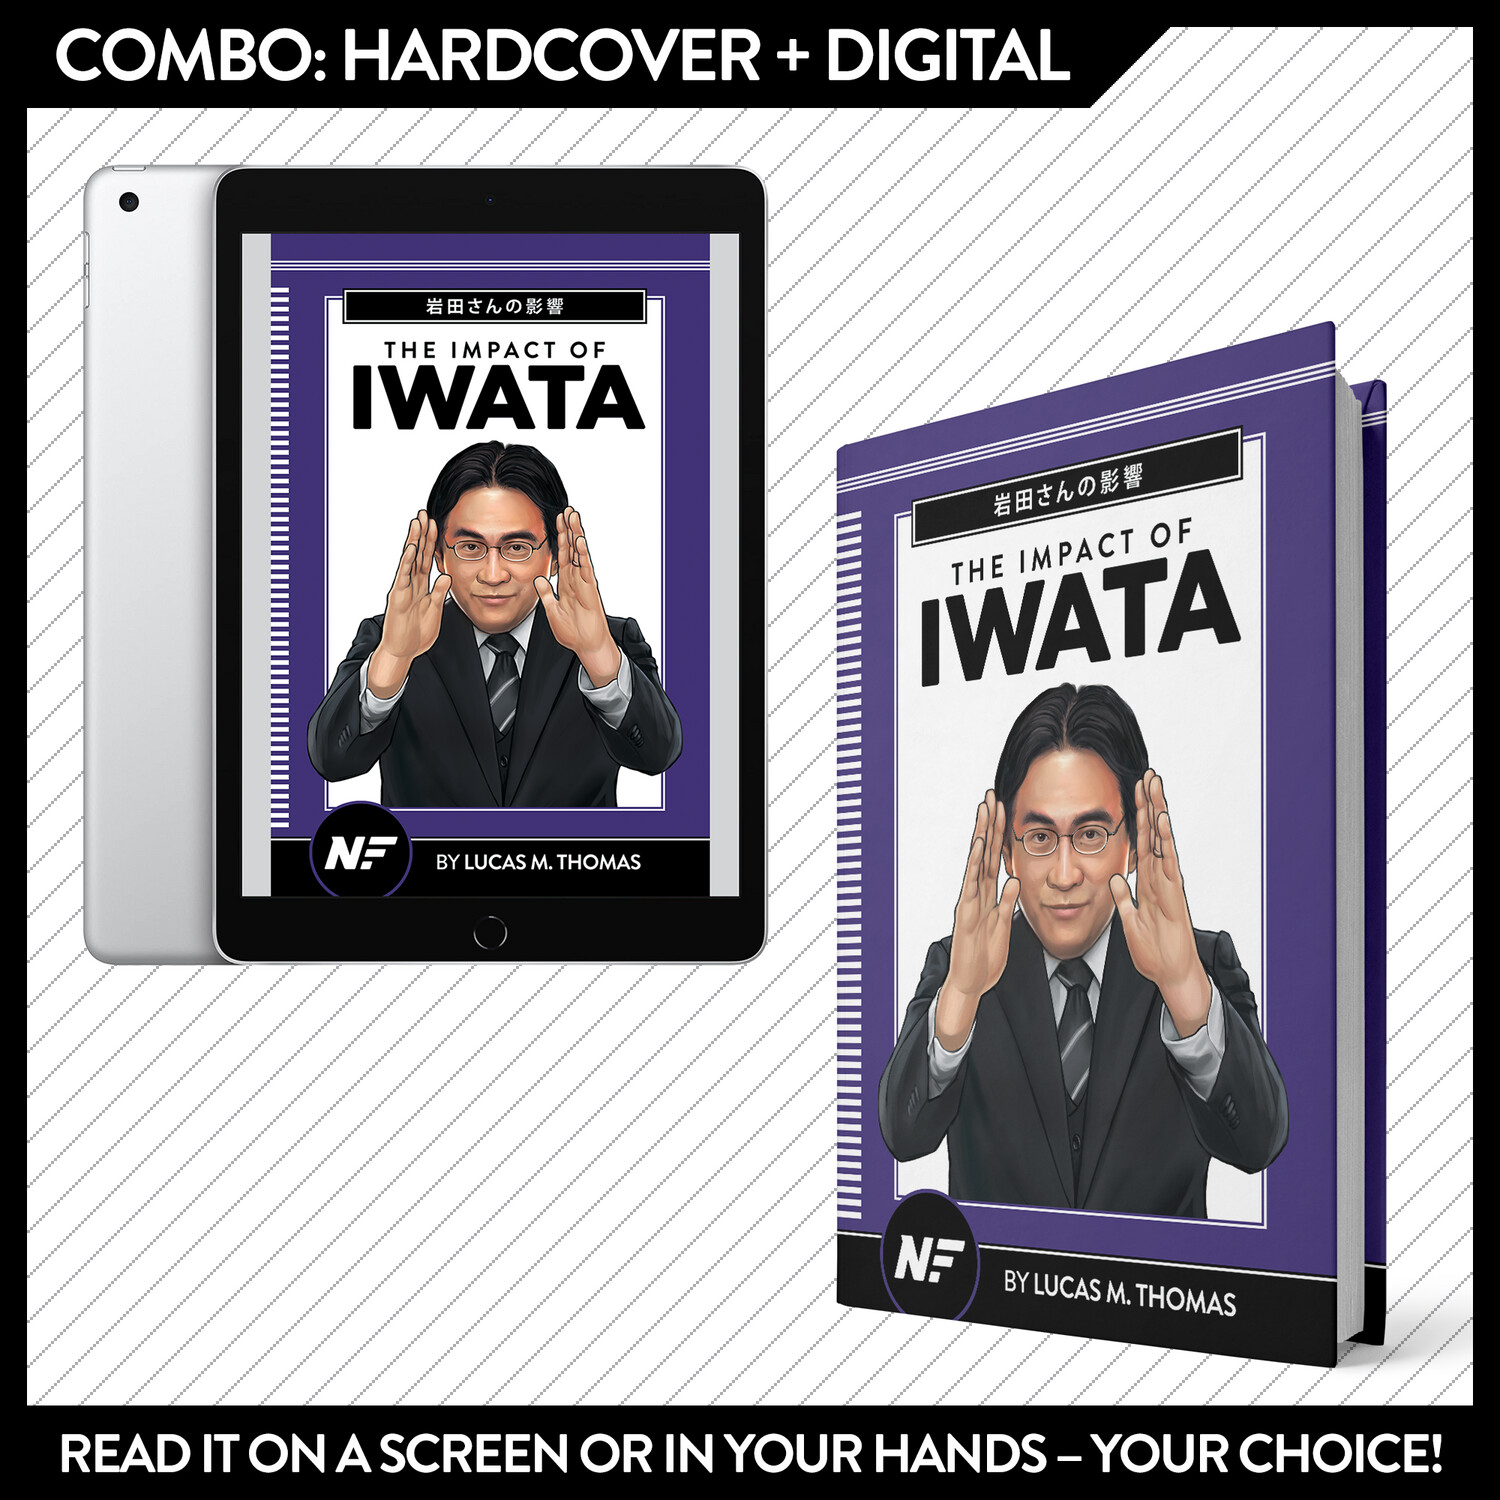 The Impact of Iwata - Hardcover + Digital Combo